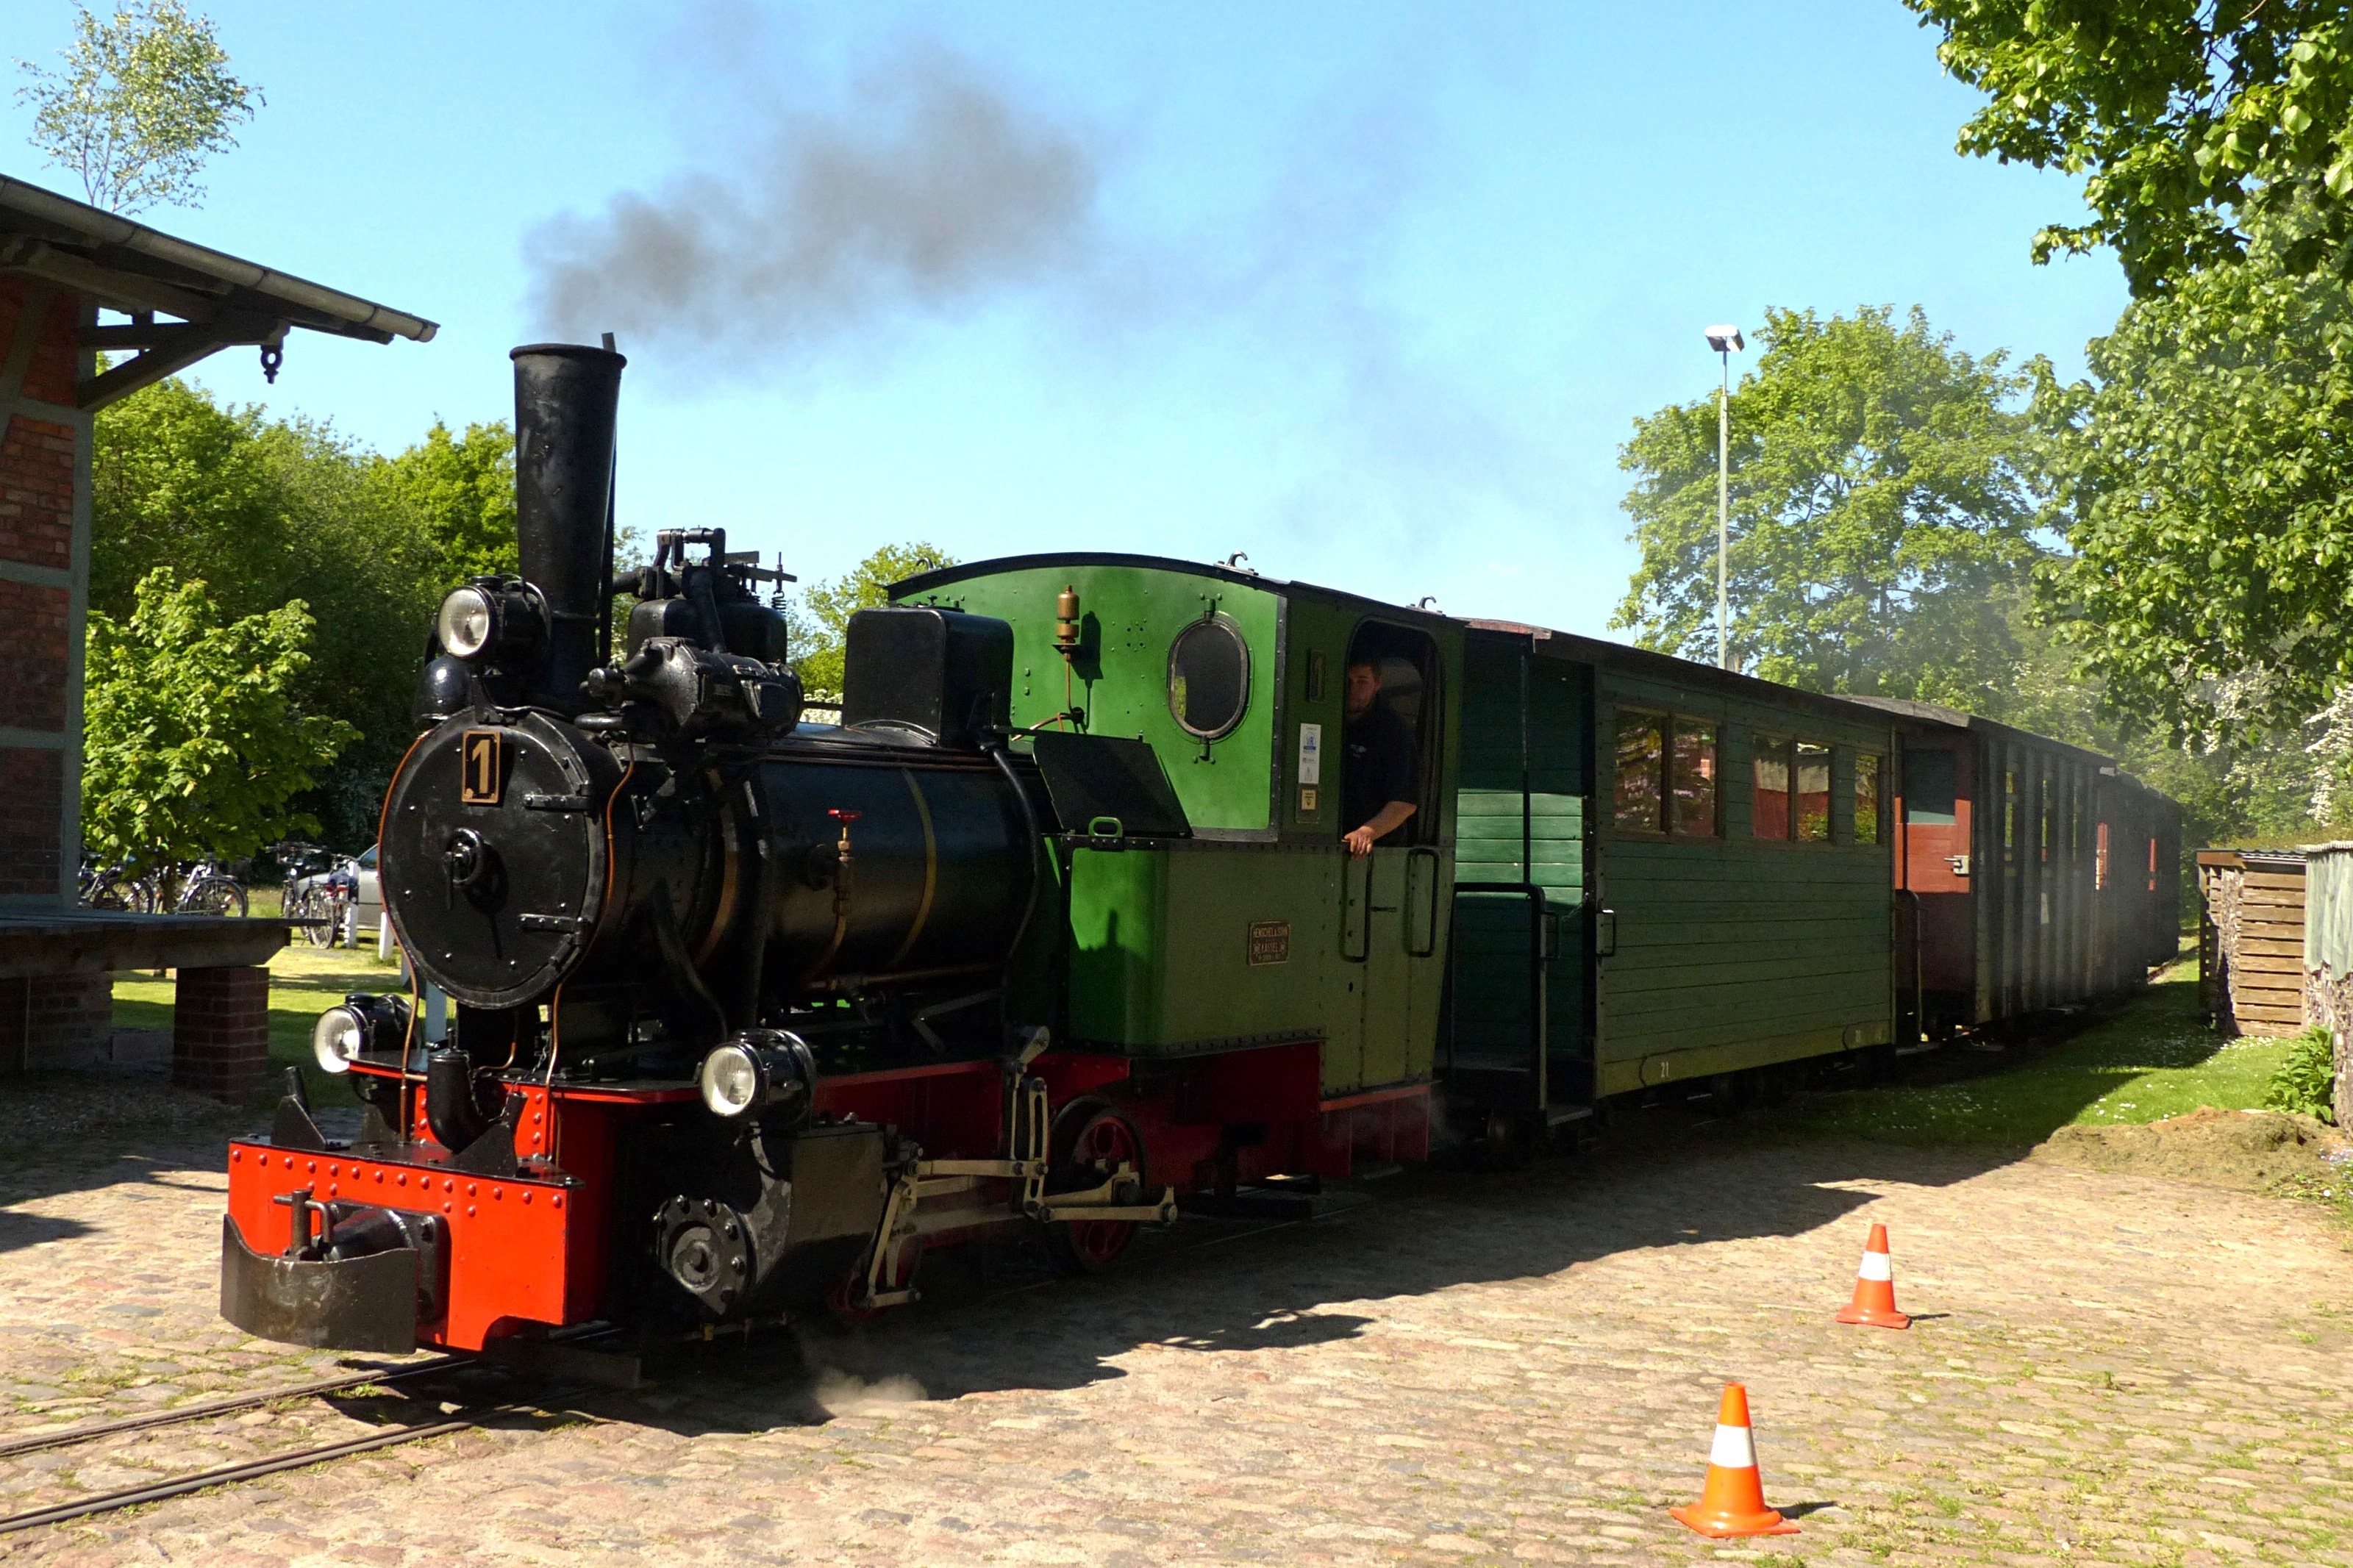 green and black steam train